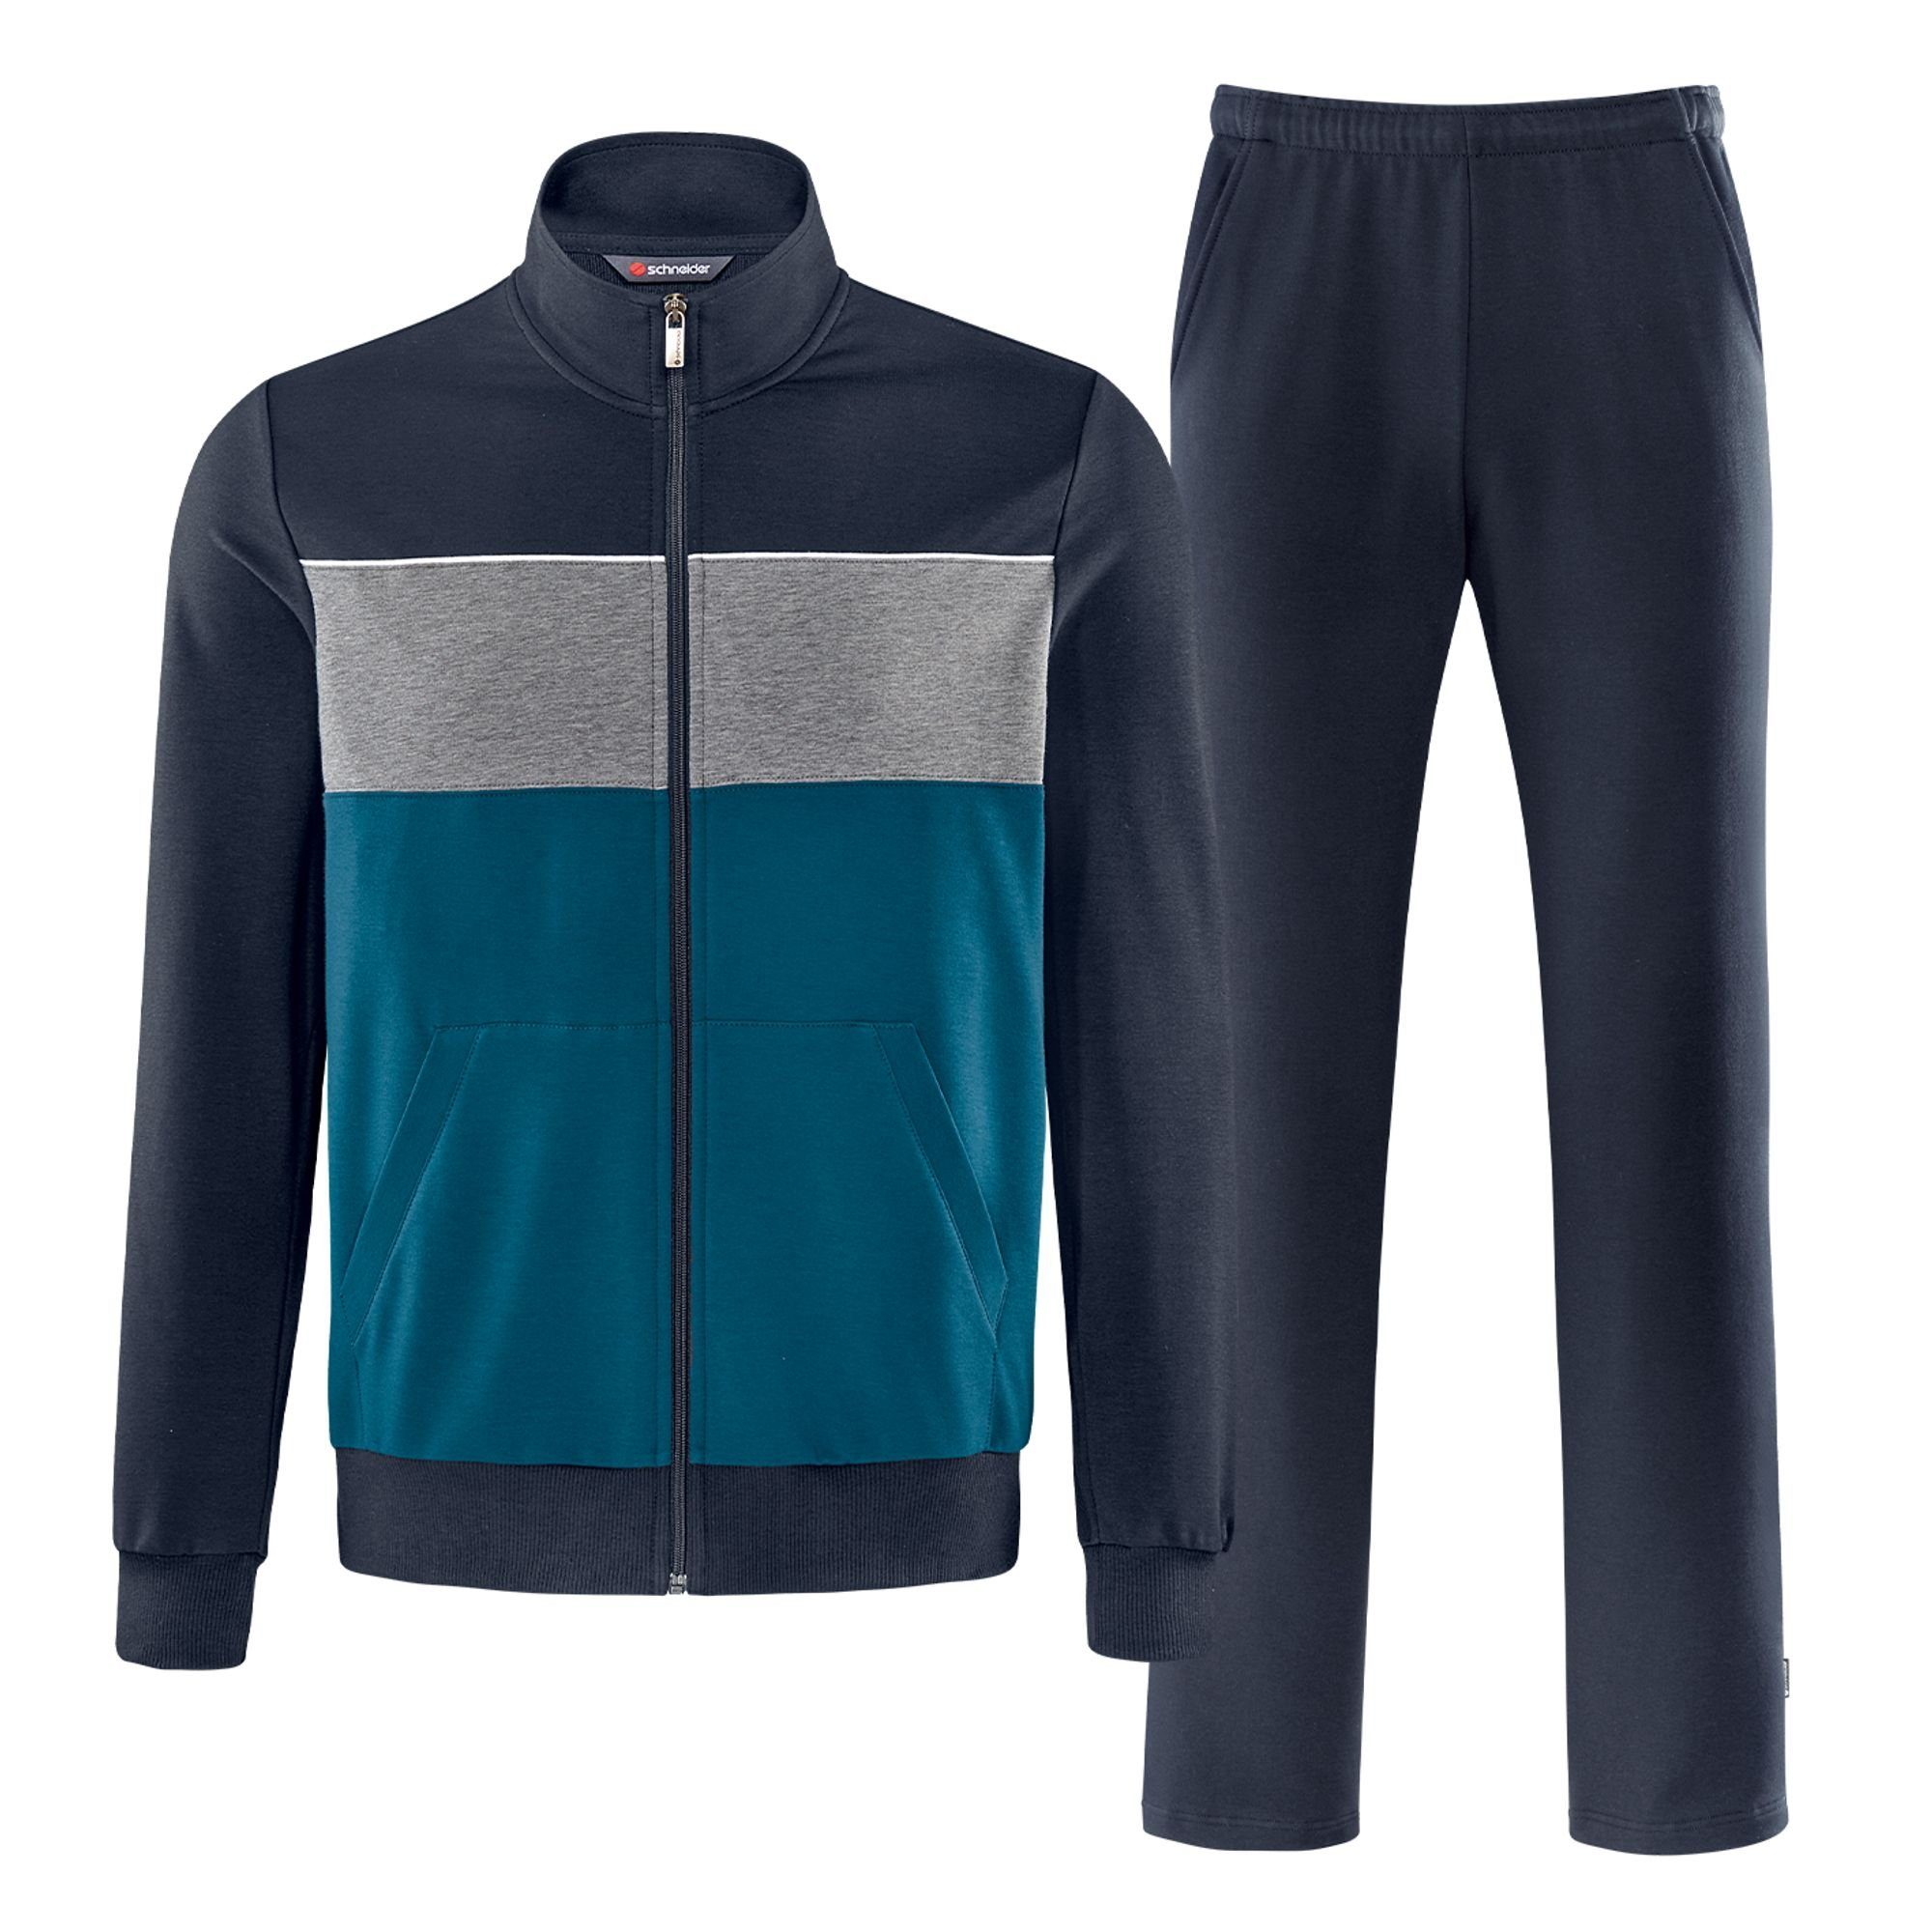 mysticblue/granit (6208) Trainingsanzug Sportswear SCHNEIDER